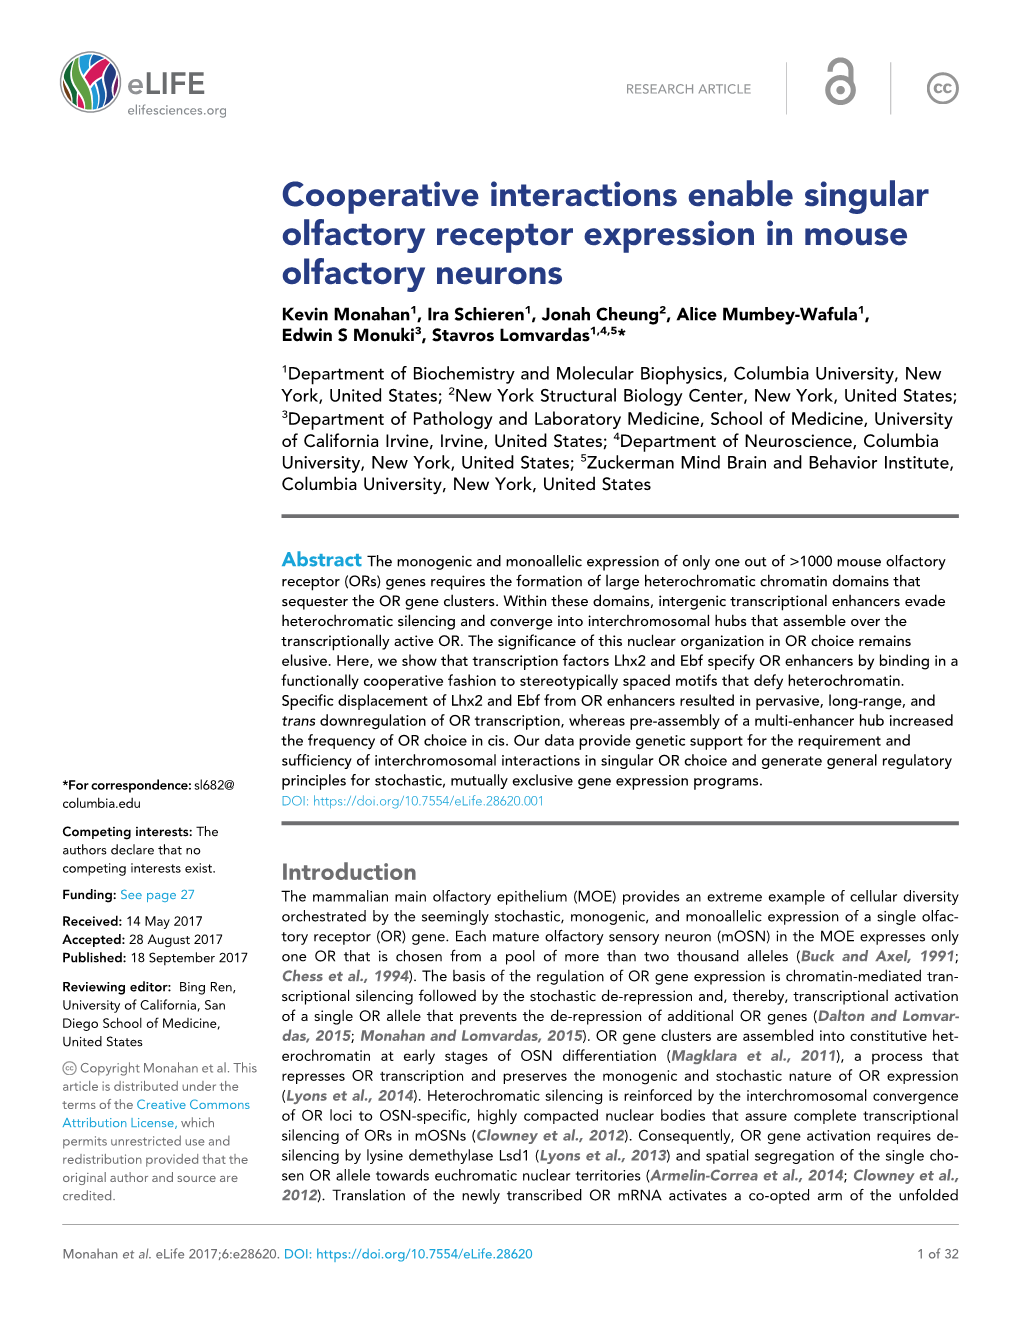 Cooperative Interactions Enable Singular Olfactory